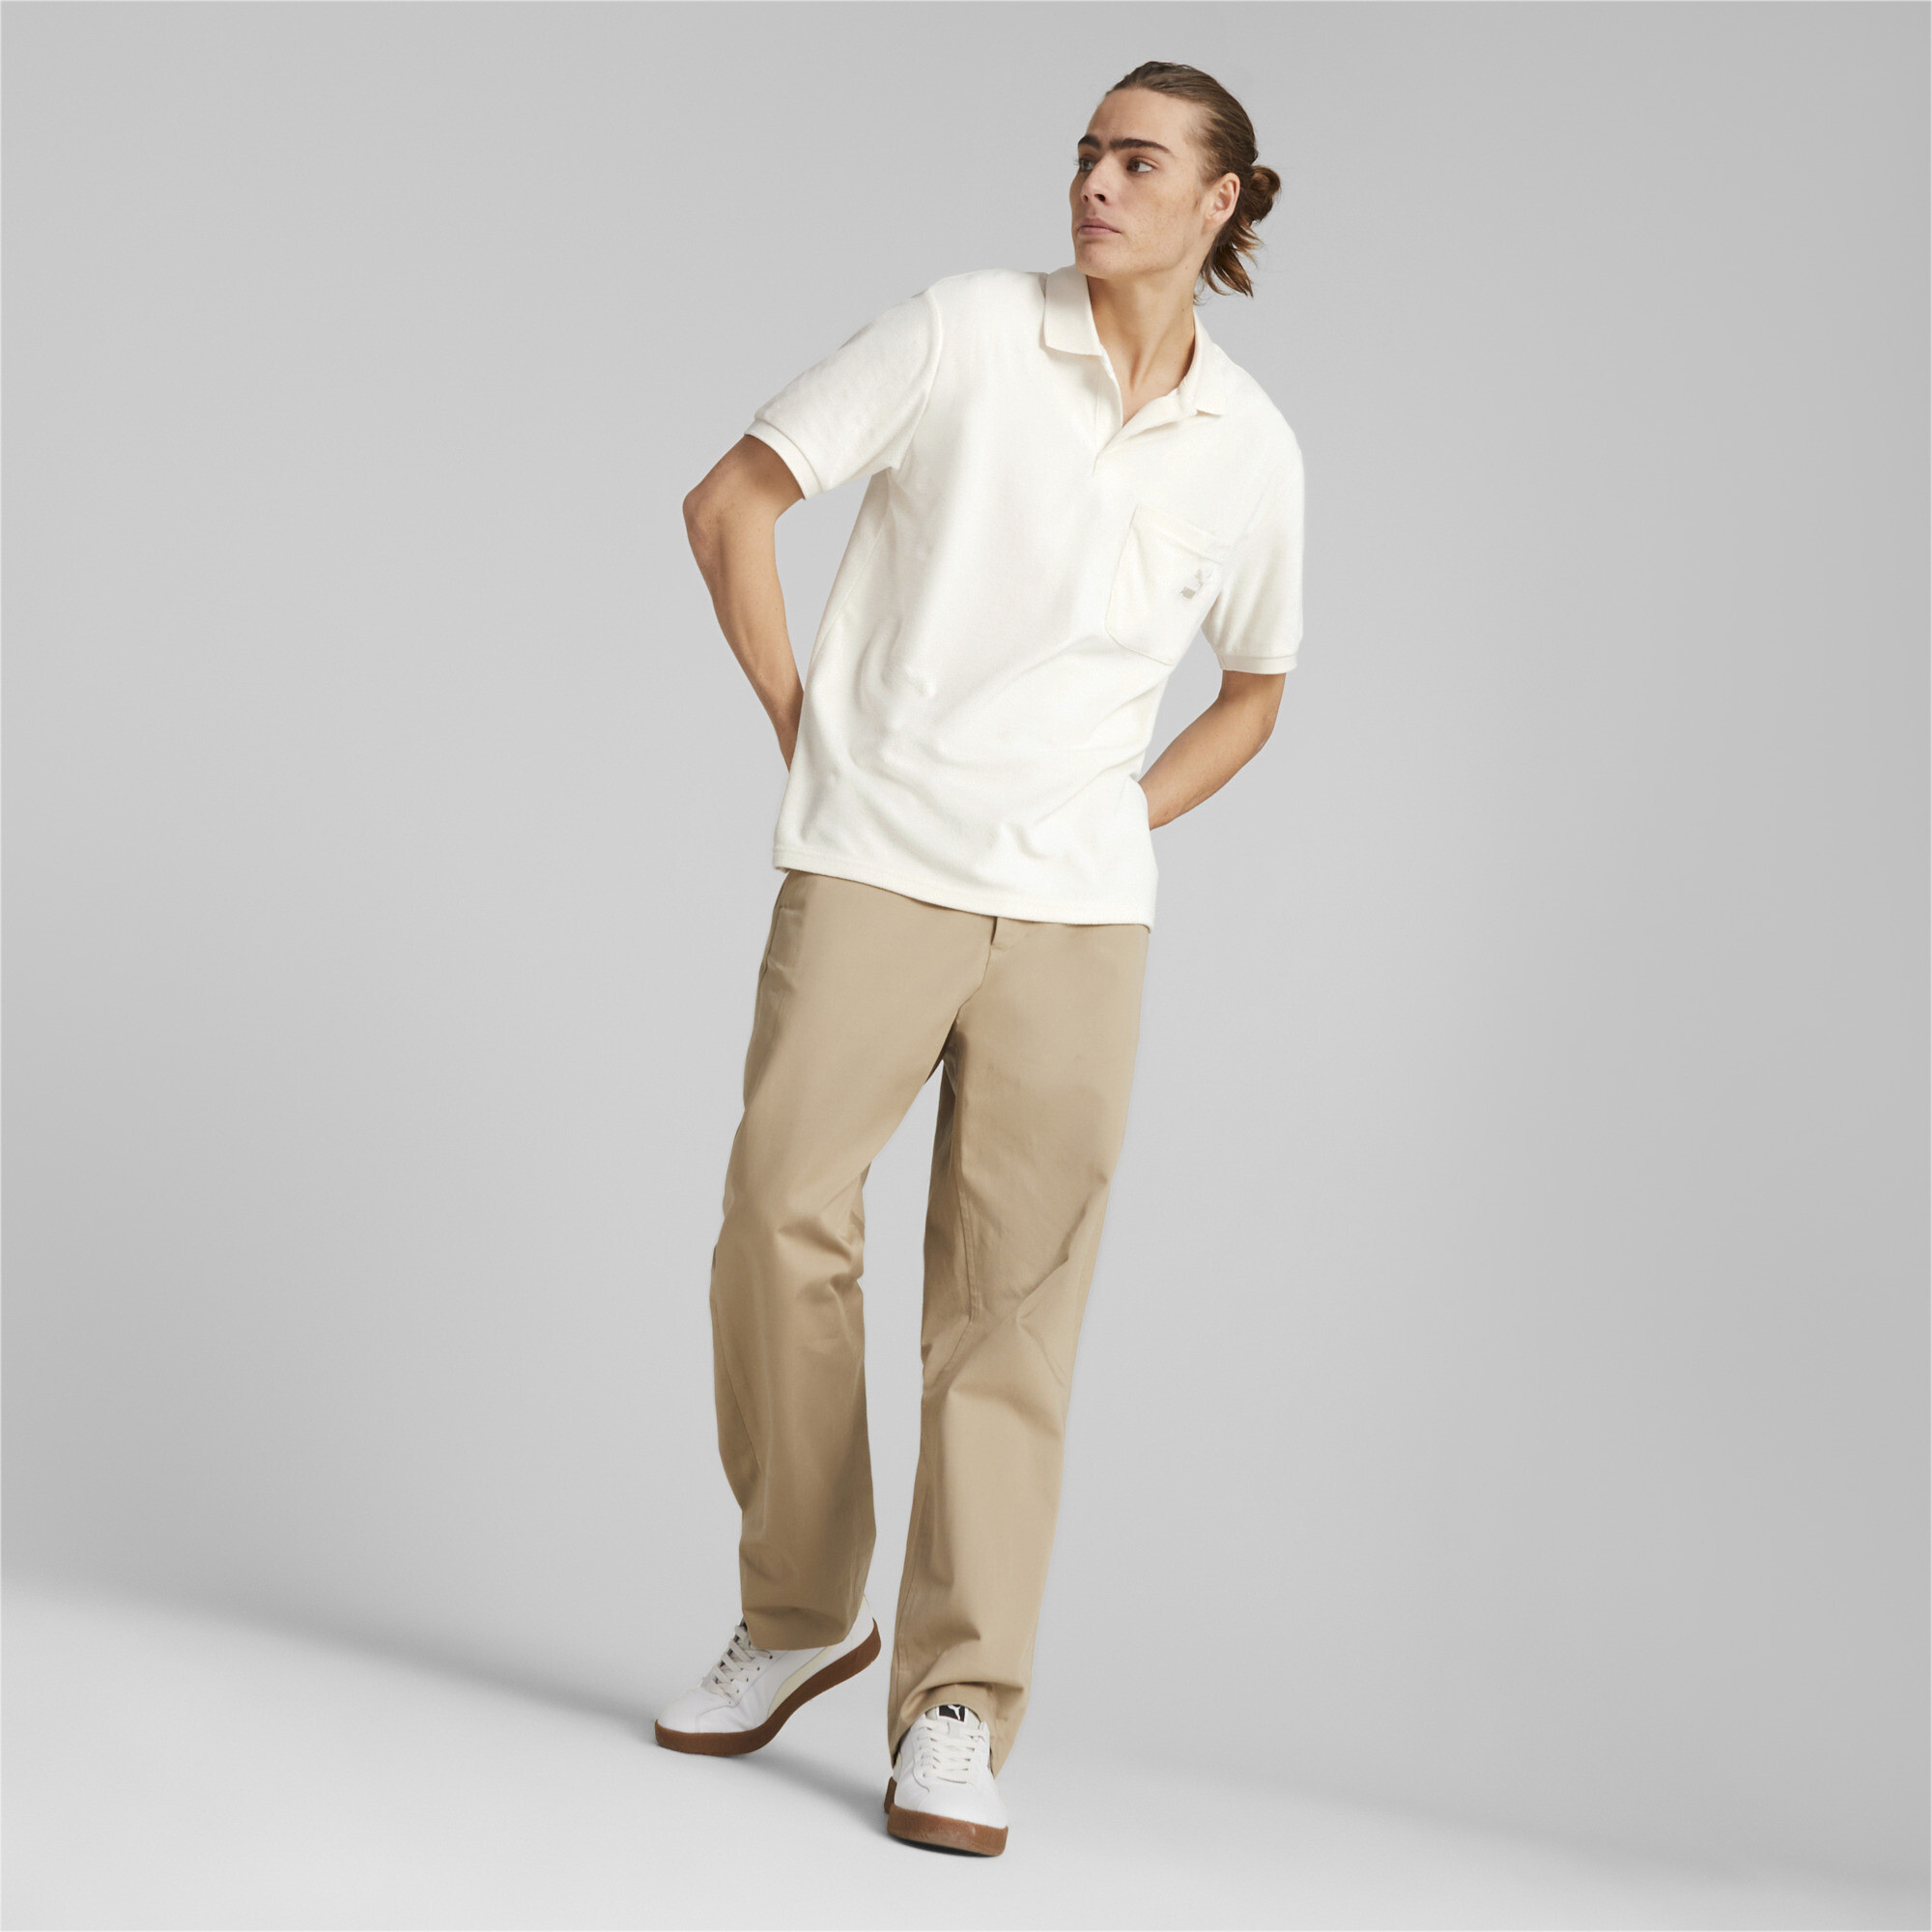 Men's Puma Classics Towelling Polo Shirt T-Shirt, White T-Shirt, Size XS T-Shirt, Clothing